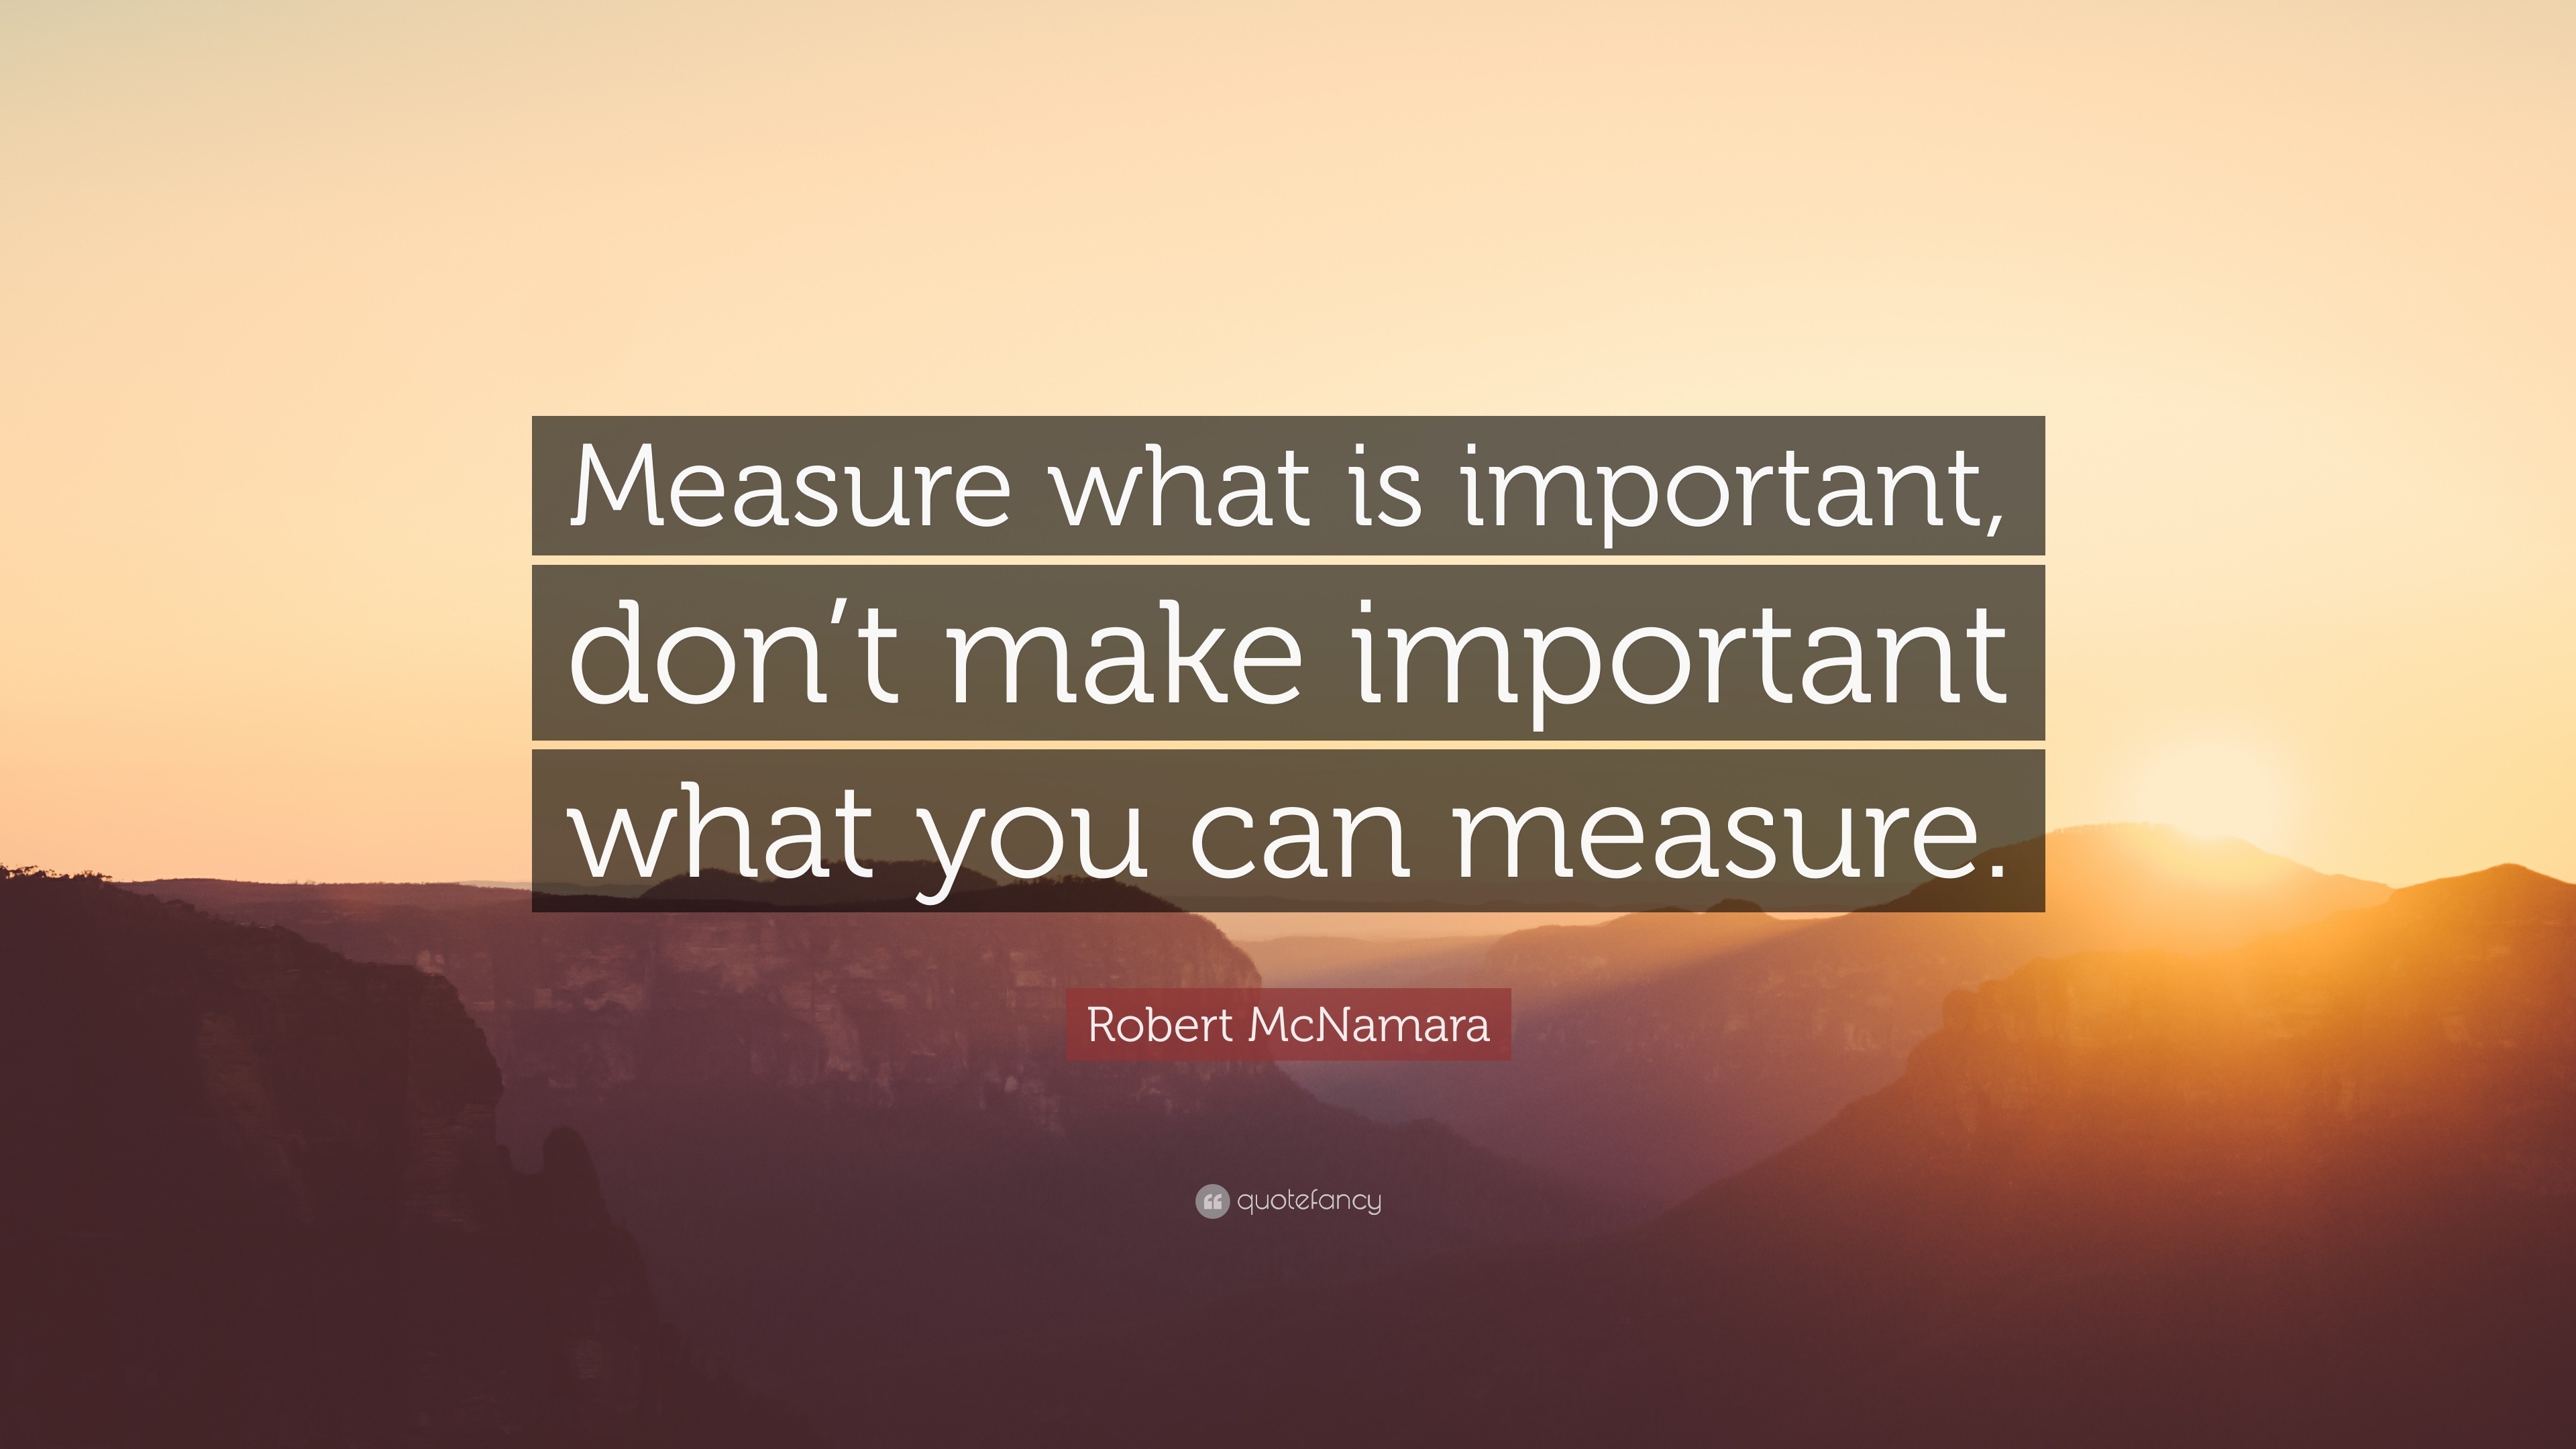 Robert McNamara Quote: “Measure what is important, don’t make important